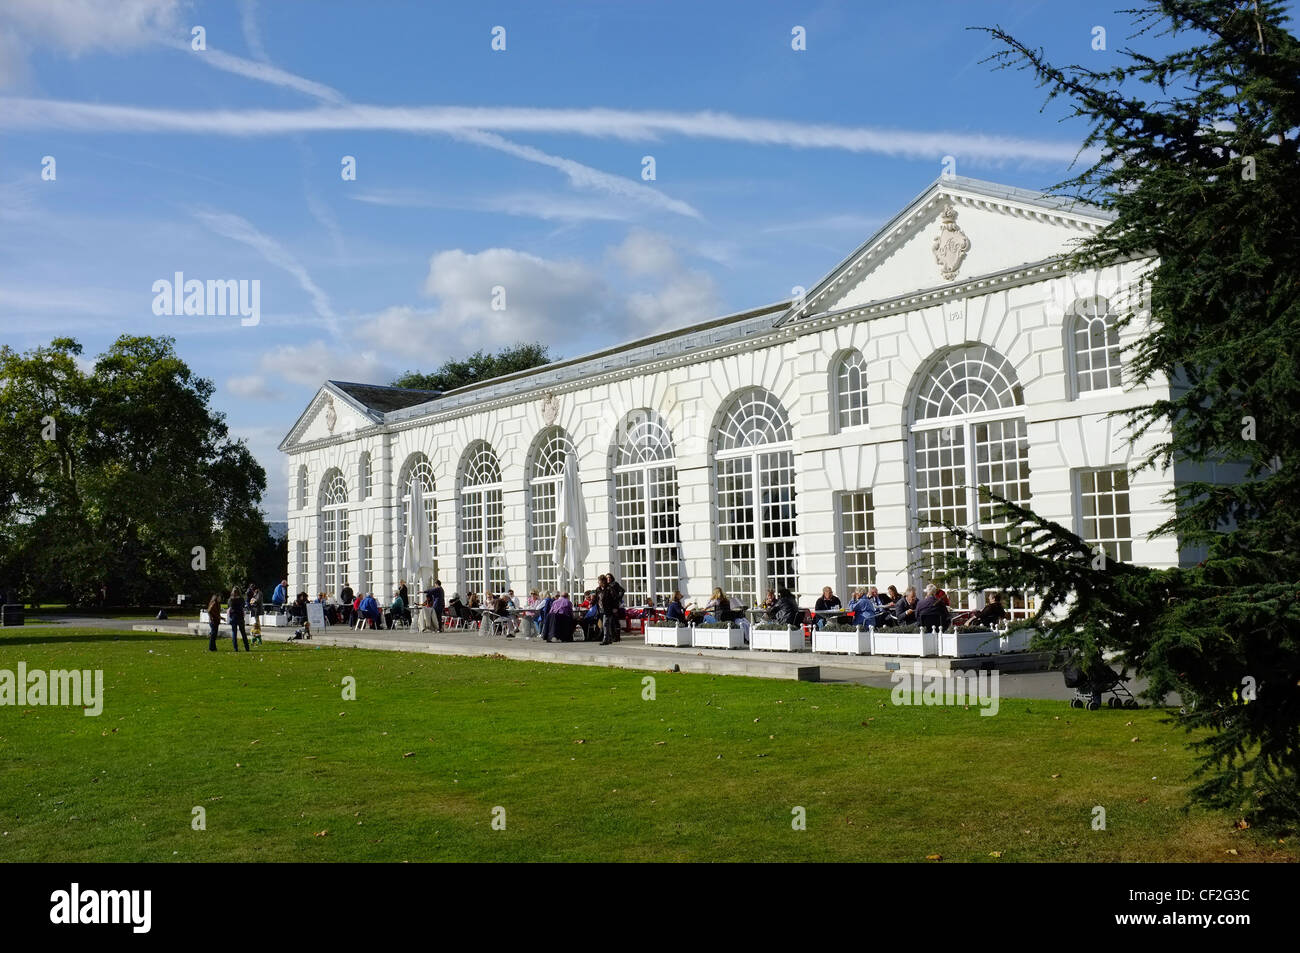 People eating outside The Orangery at the Royal Botanic Gardens Kew. Stock Photo